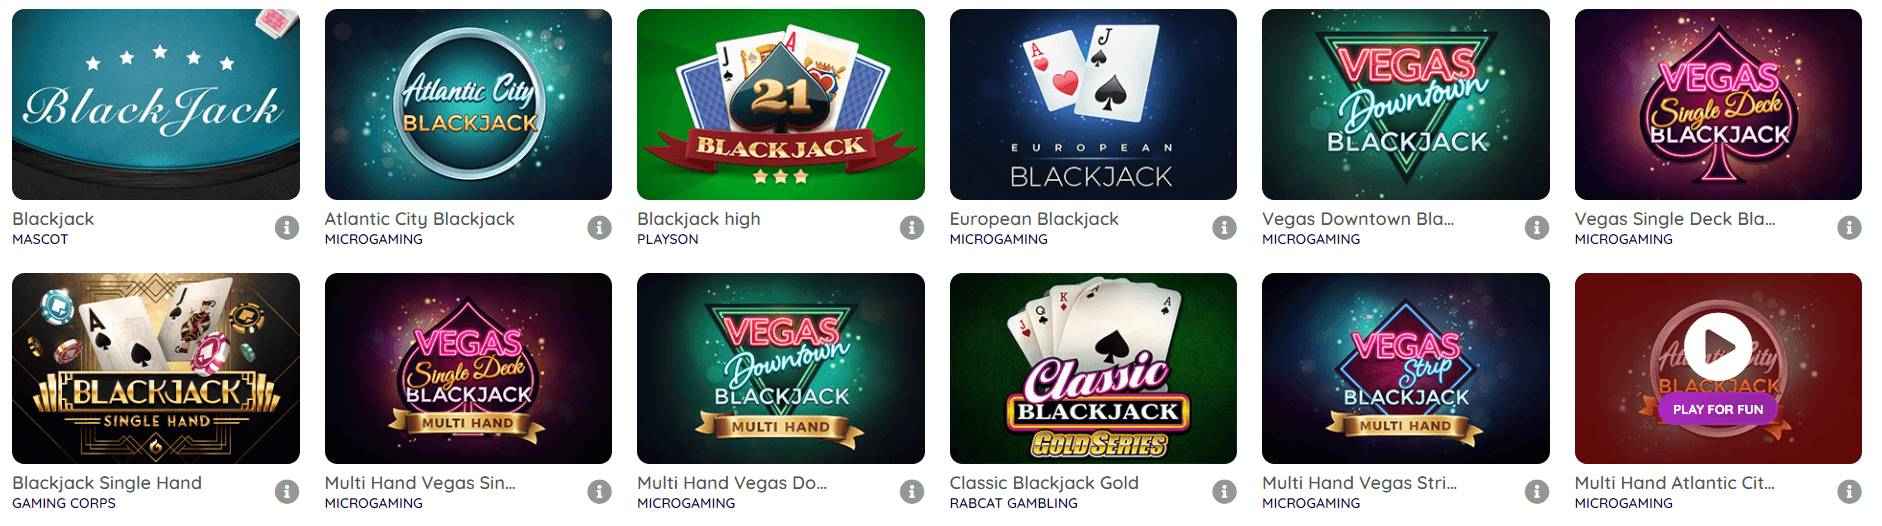 More Online Casino Blackjack Games